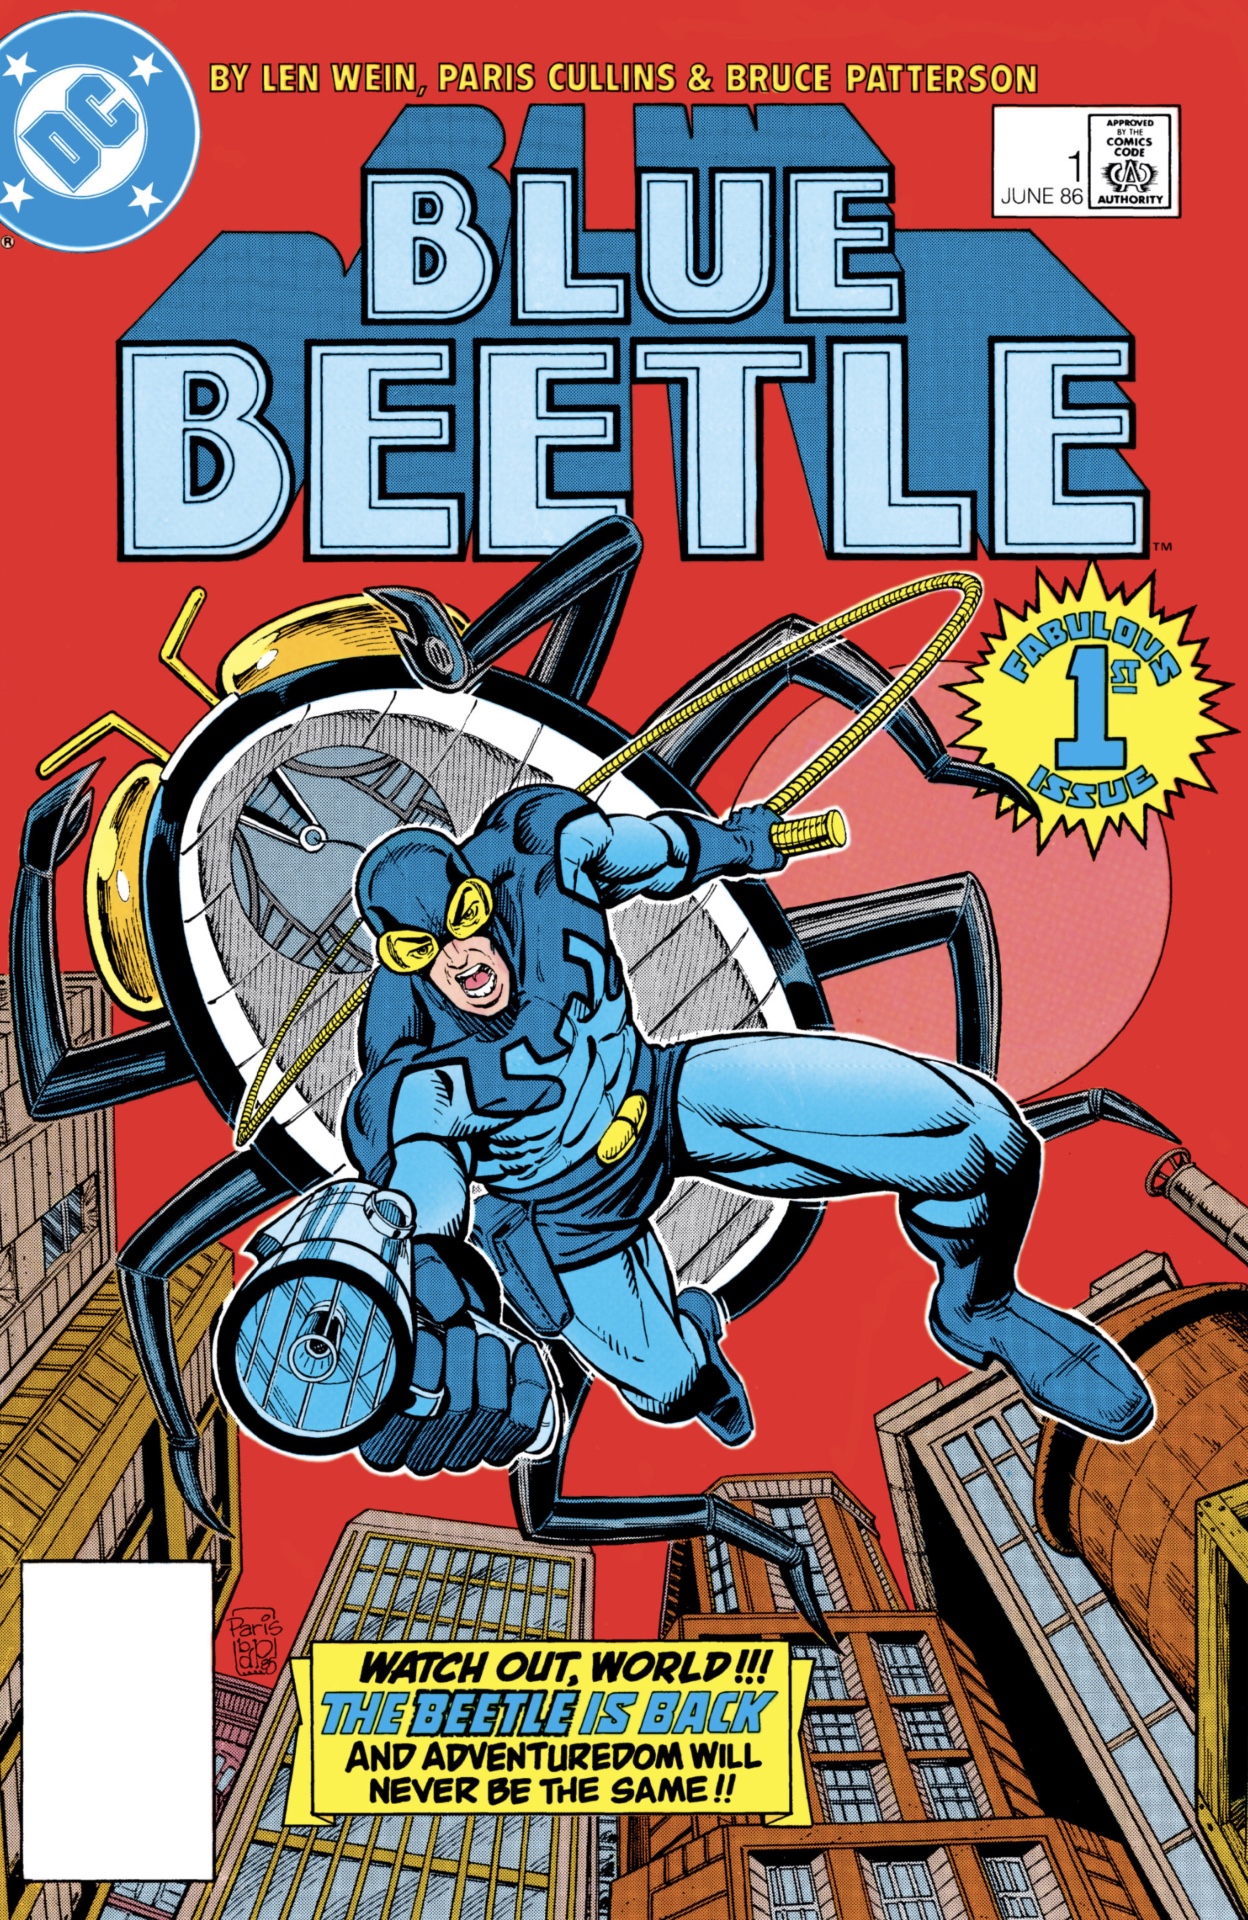 Blauer Käfer in Comics